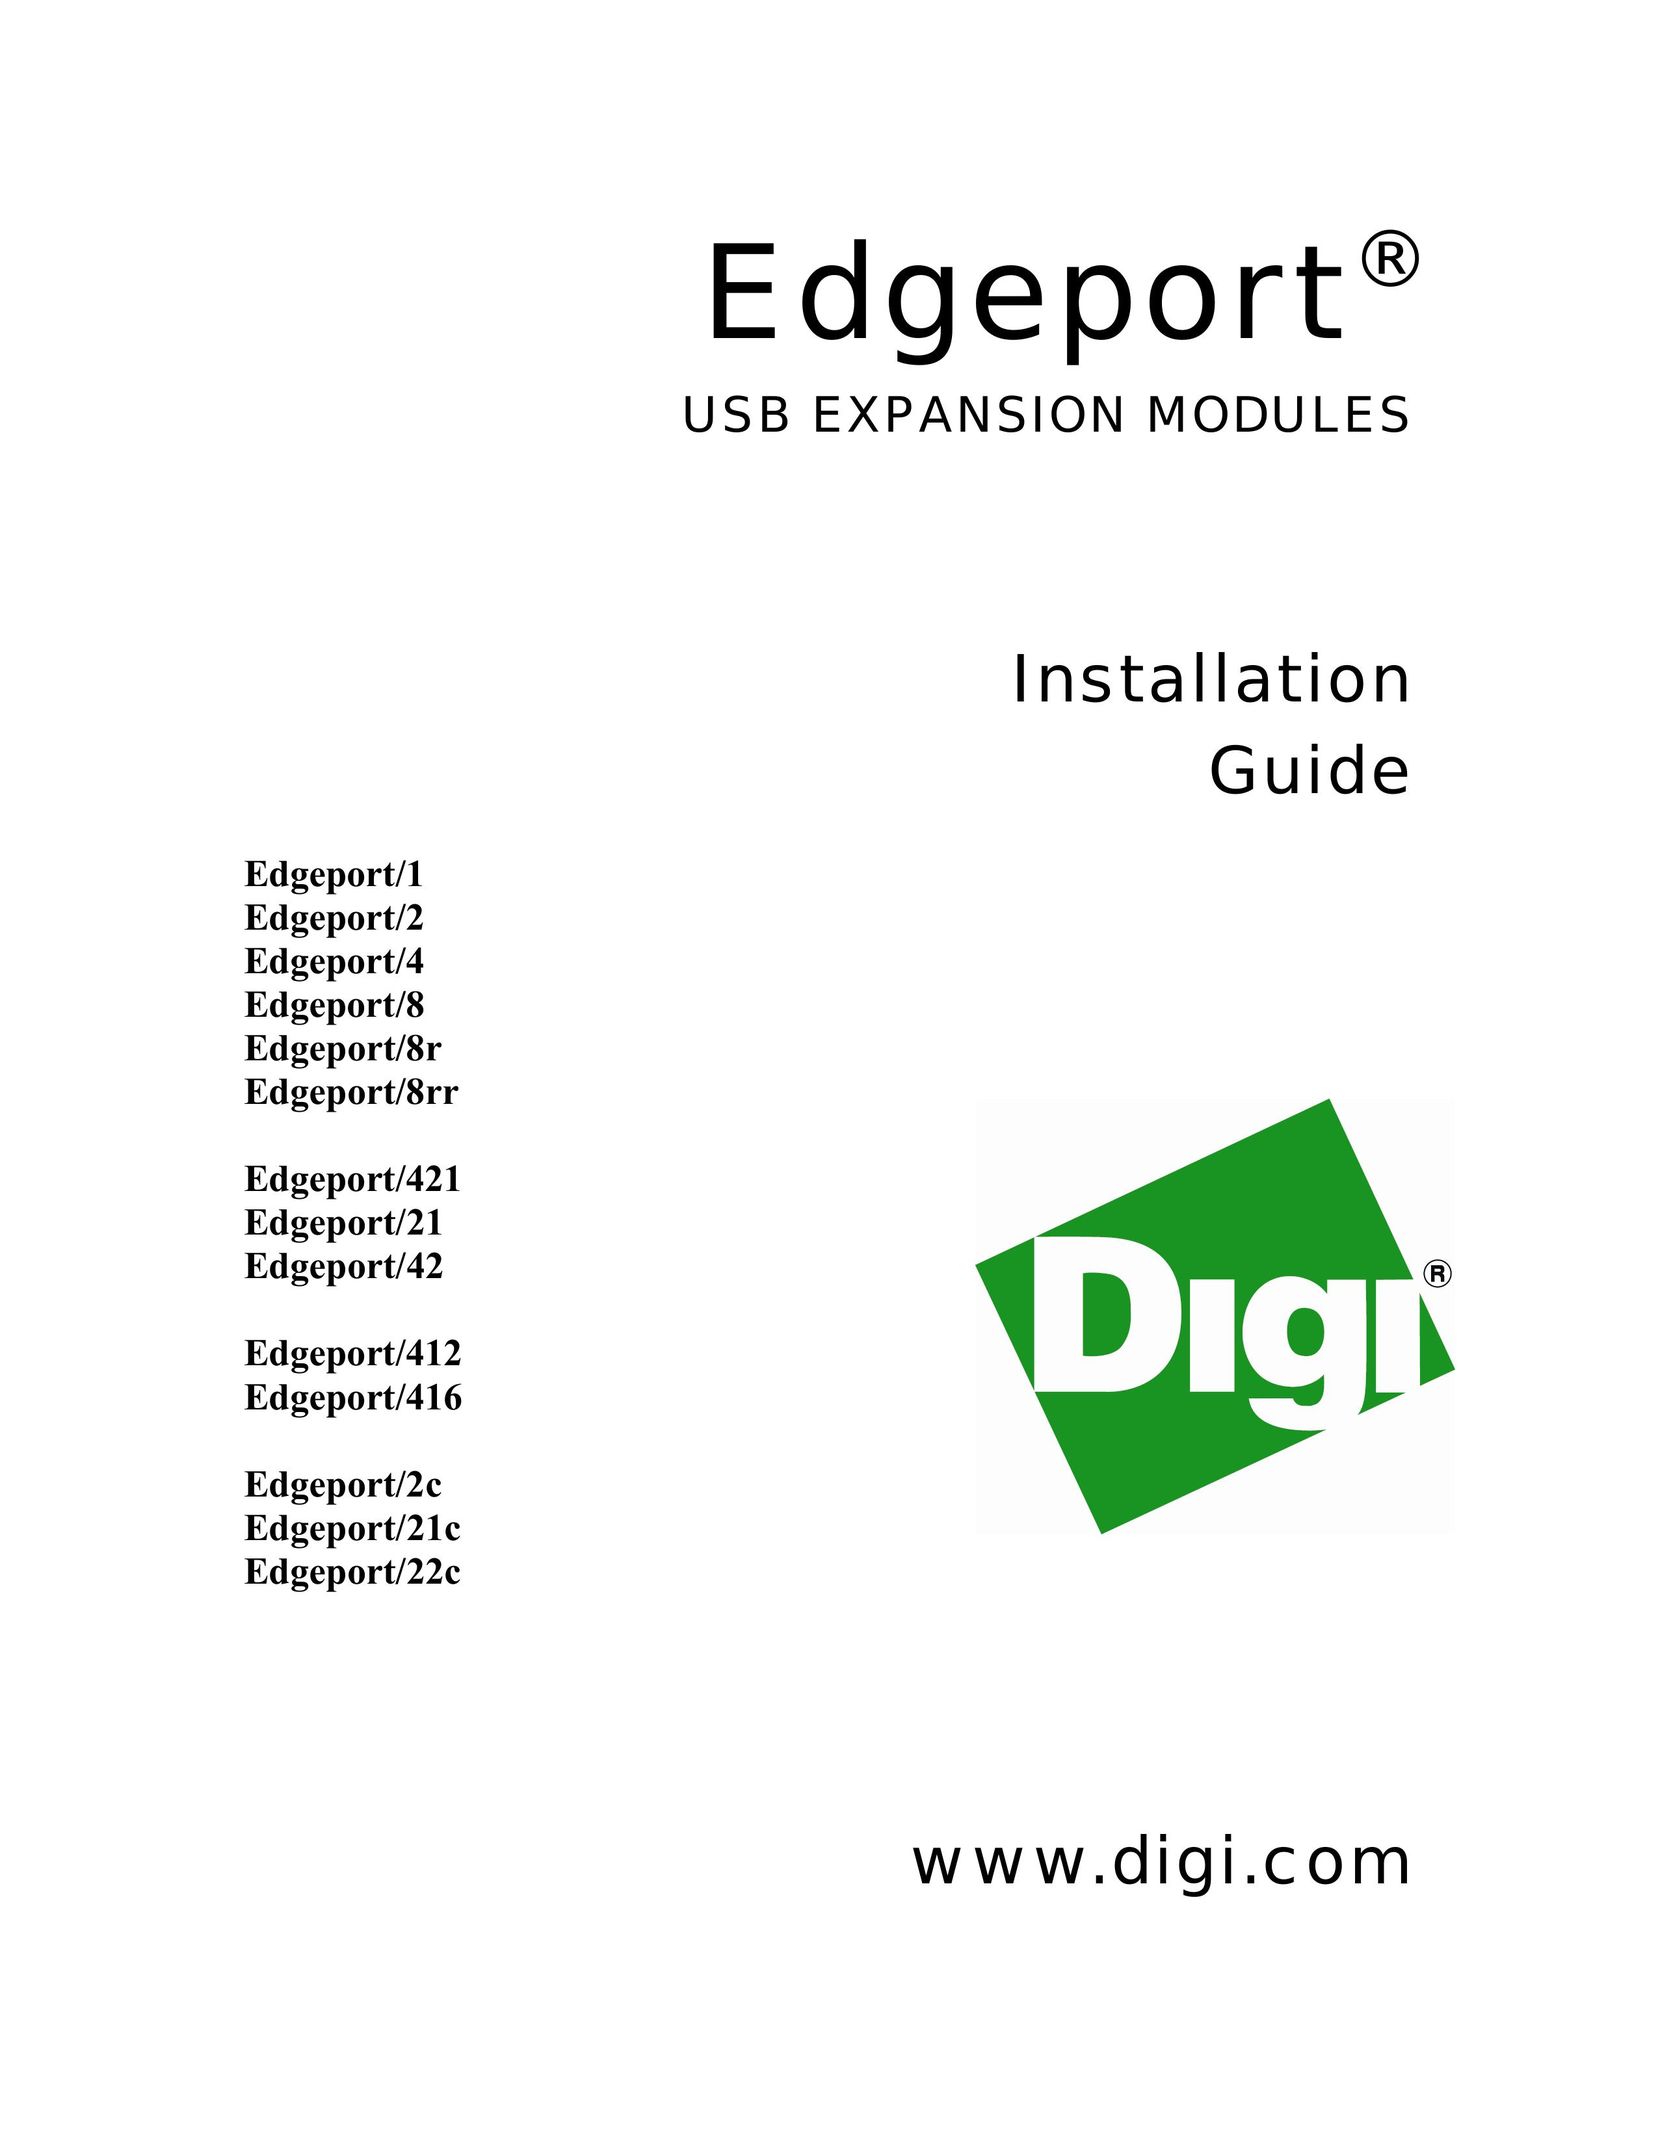 Digi Edgeport/2c Network Card User Manual